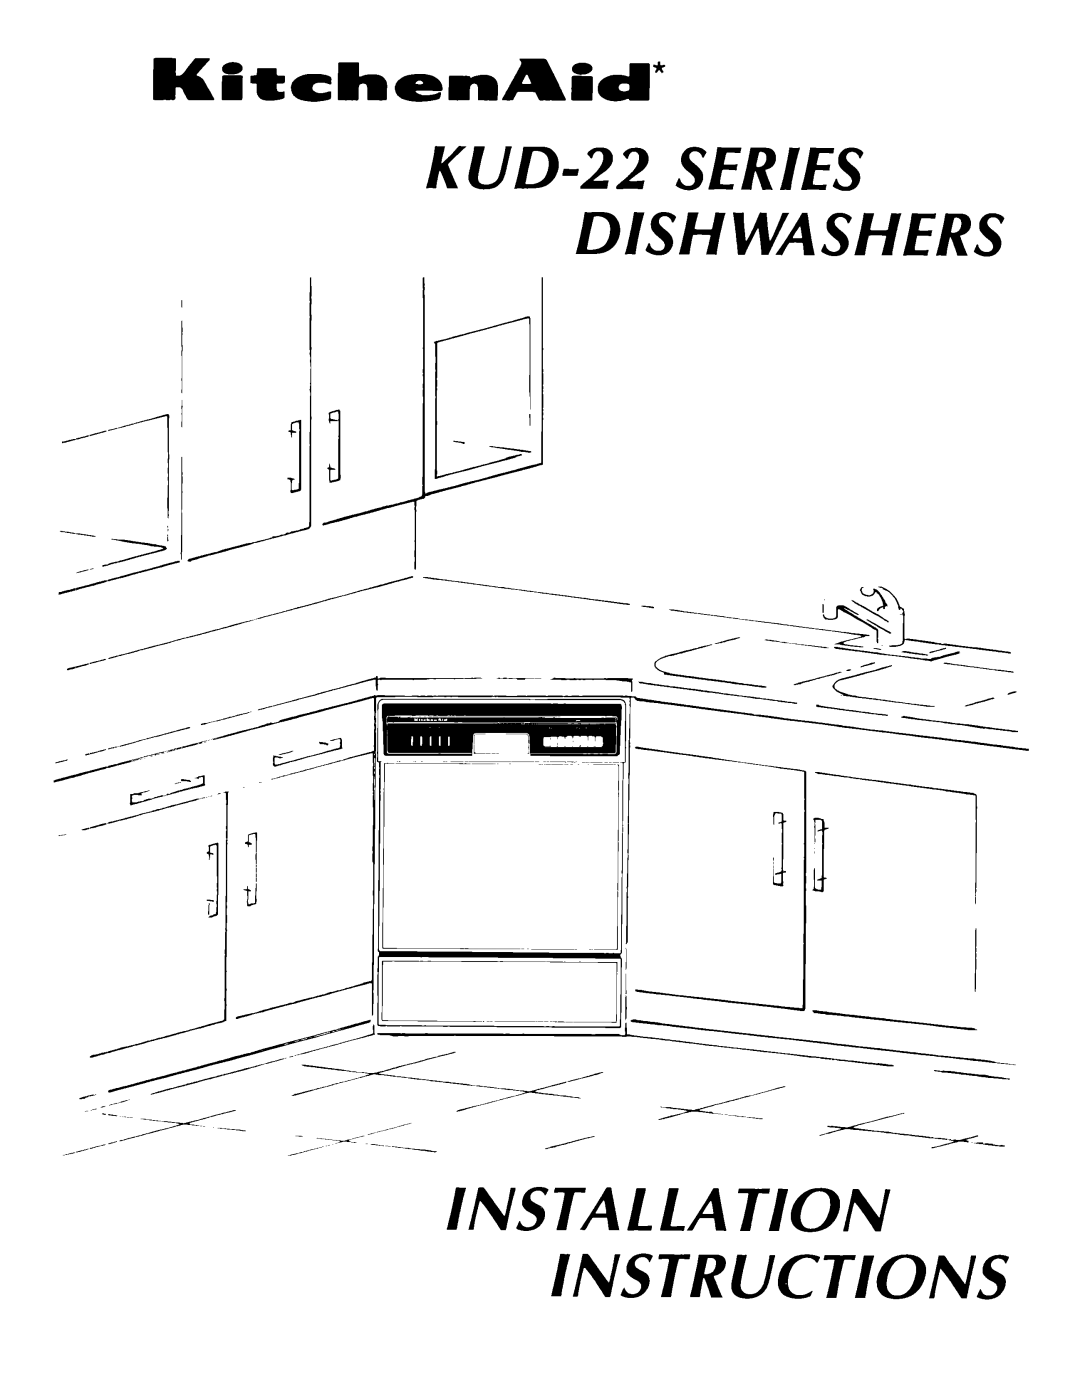 KitchenAid manual KUD-22 SERIES DISH WASHERS, UitchenAtd, Insta Lla T/On Instructions 